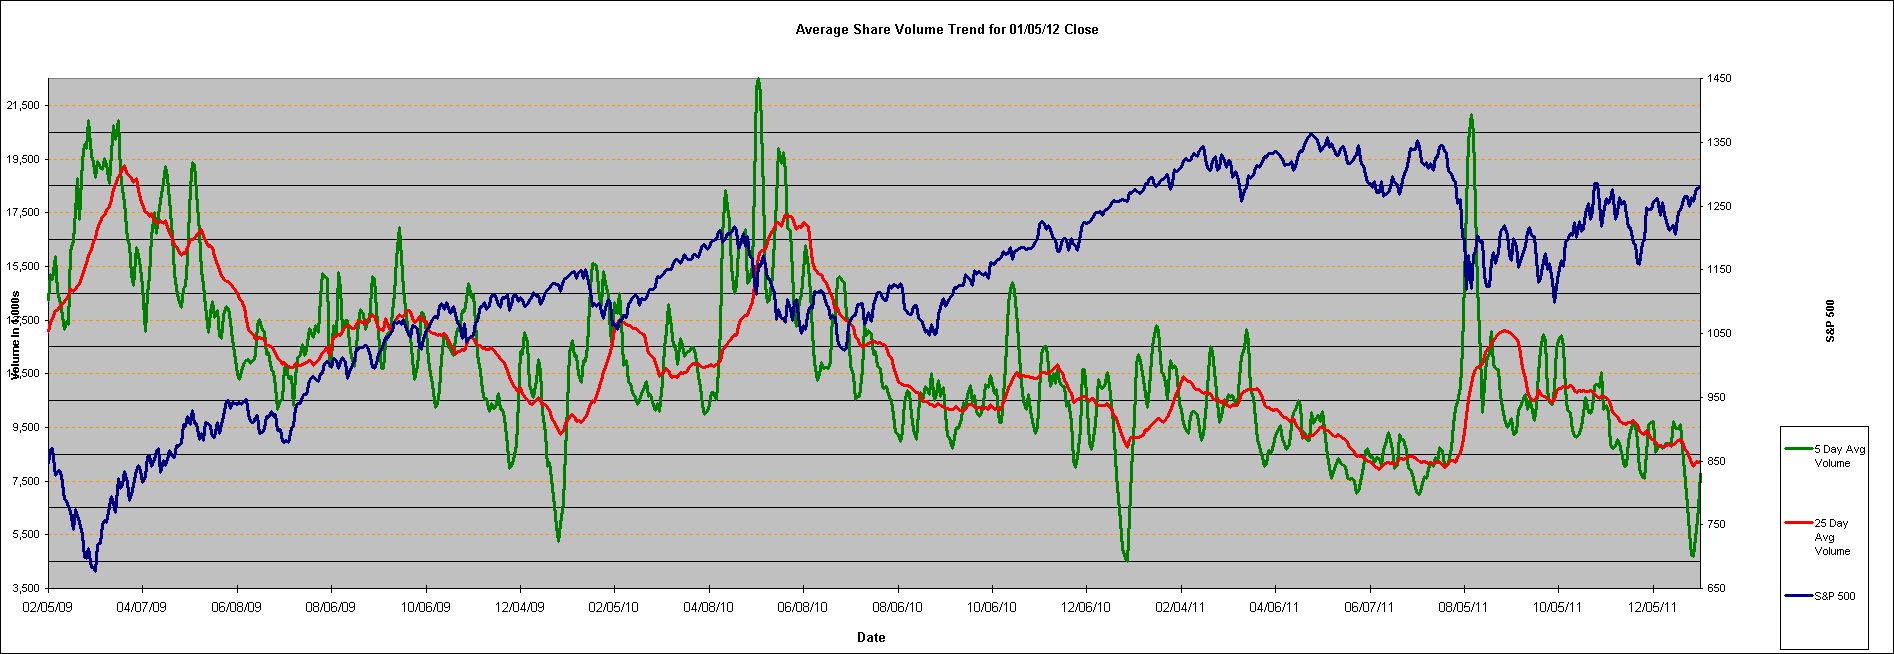 Average Share Volume Trend for 01/05/12 Close